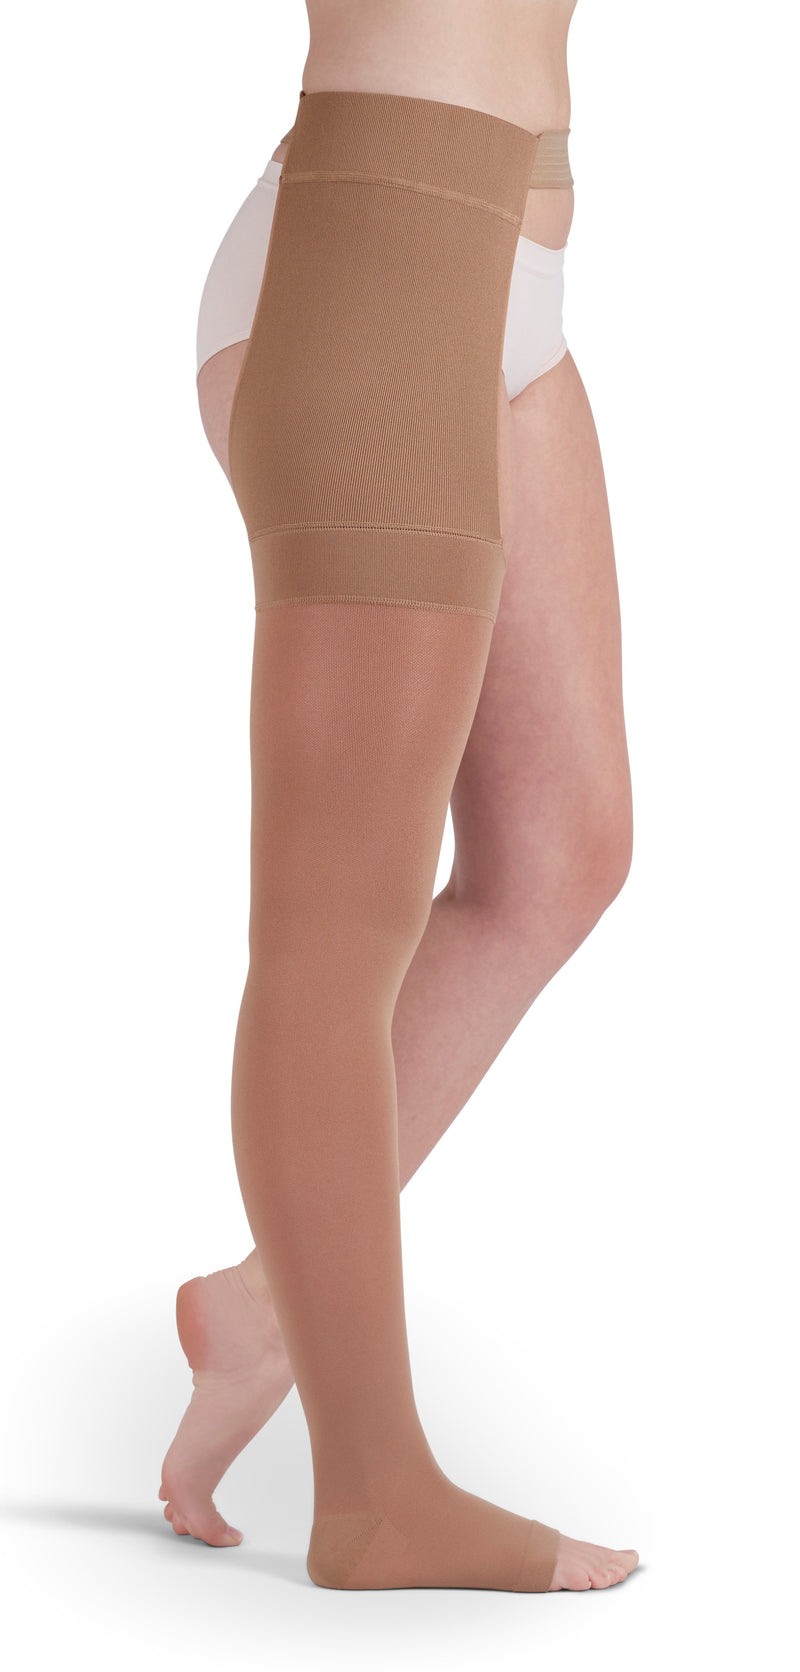 mediven plus 20-30 mmHg Thigh High w/Attachment Open Toe Compression Stockings (Right), I-Standard